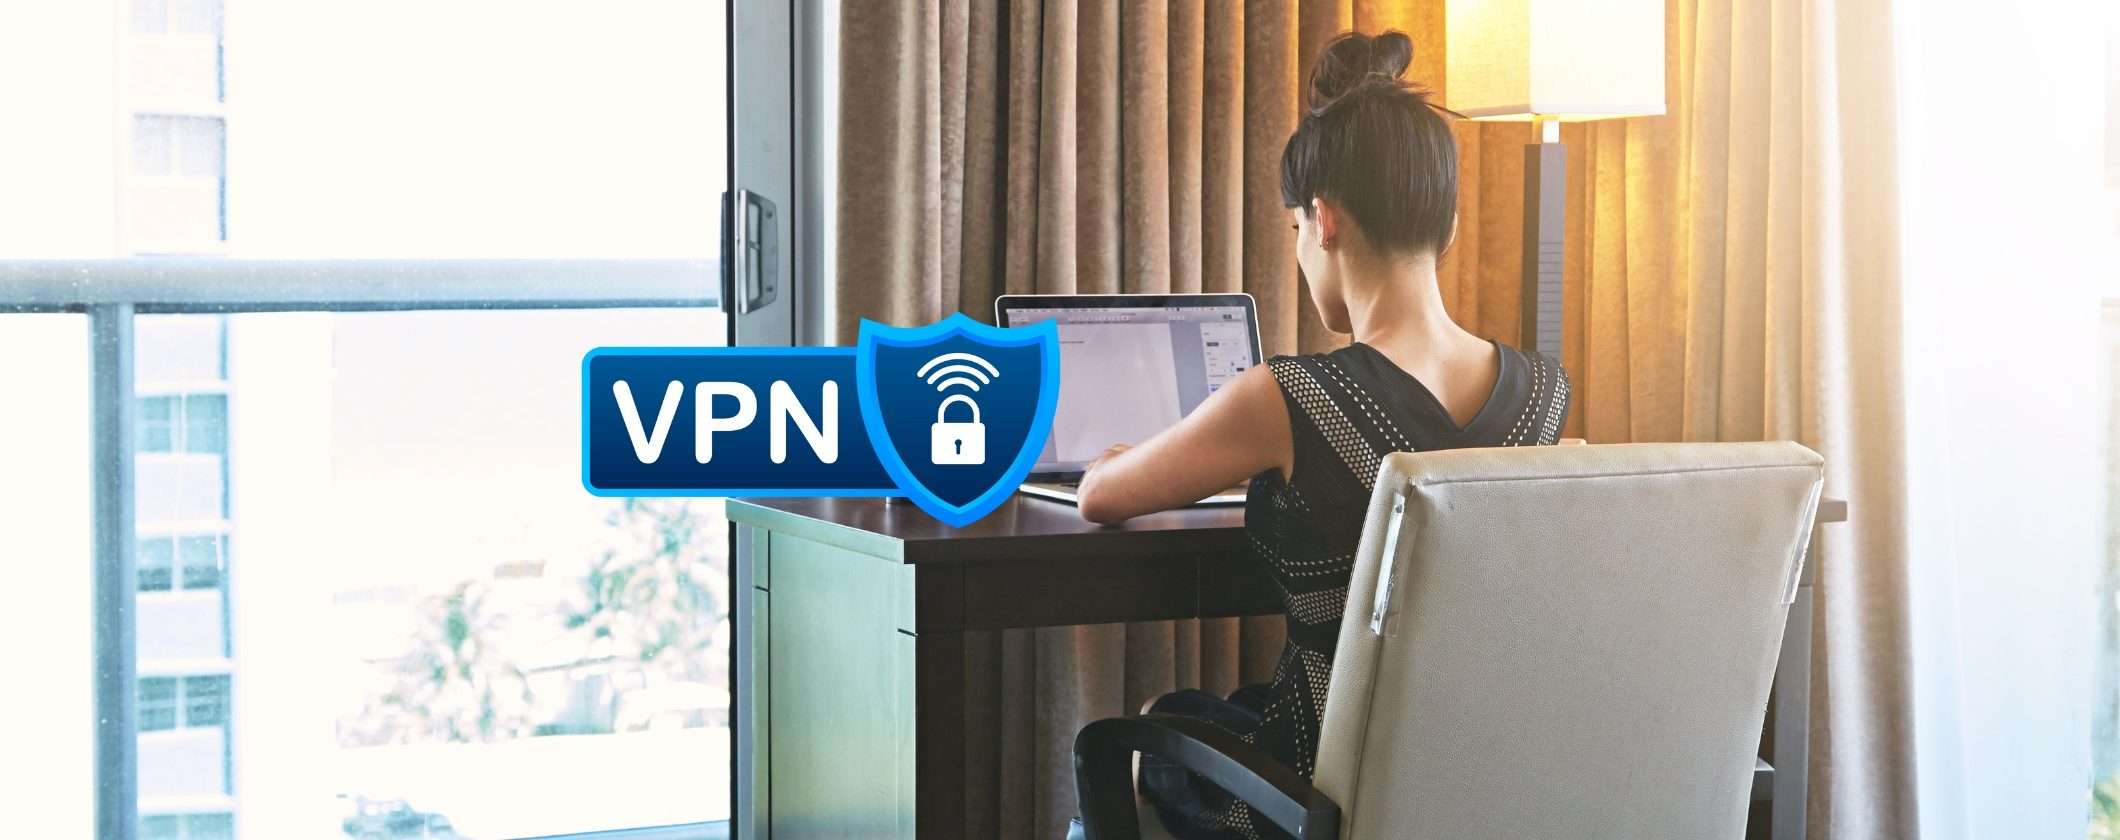 Perché una VPN è essenziale per la tua sicurezza in albergo